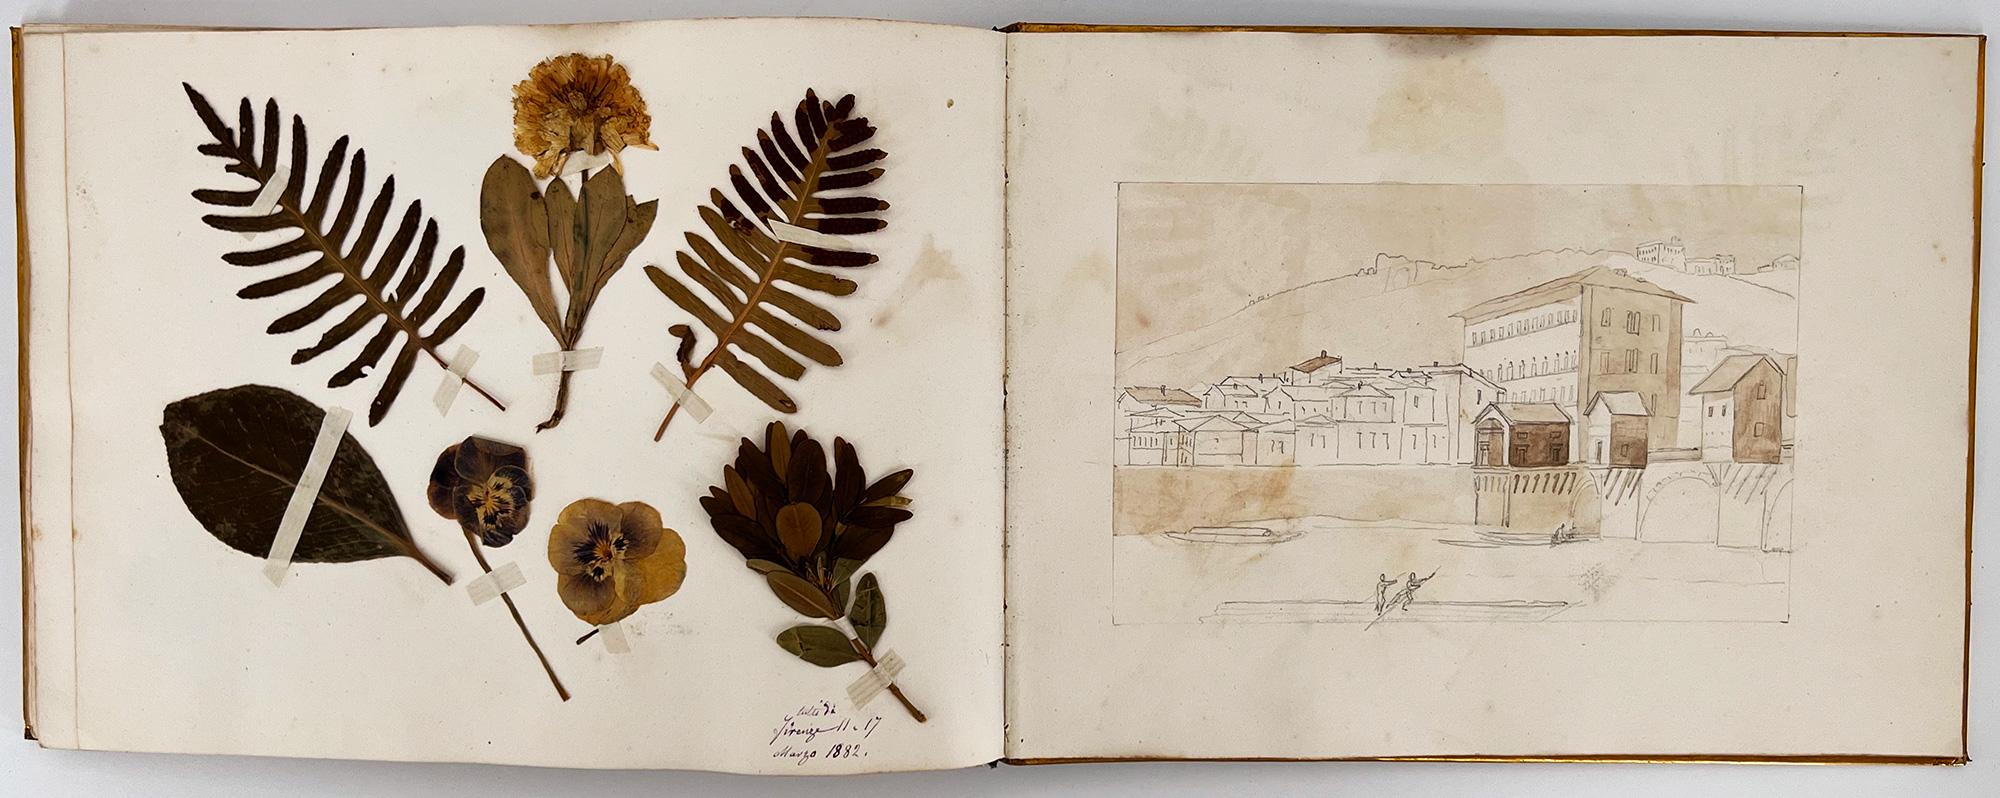 Italian 19th Century Album Containing Drawings, Memorabilia, and Botanical Samples For Sale